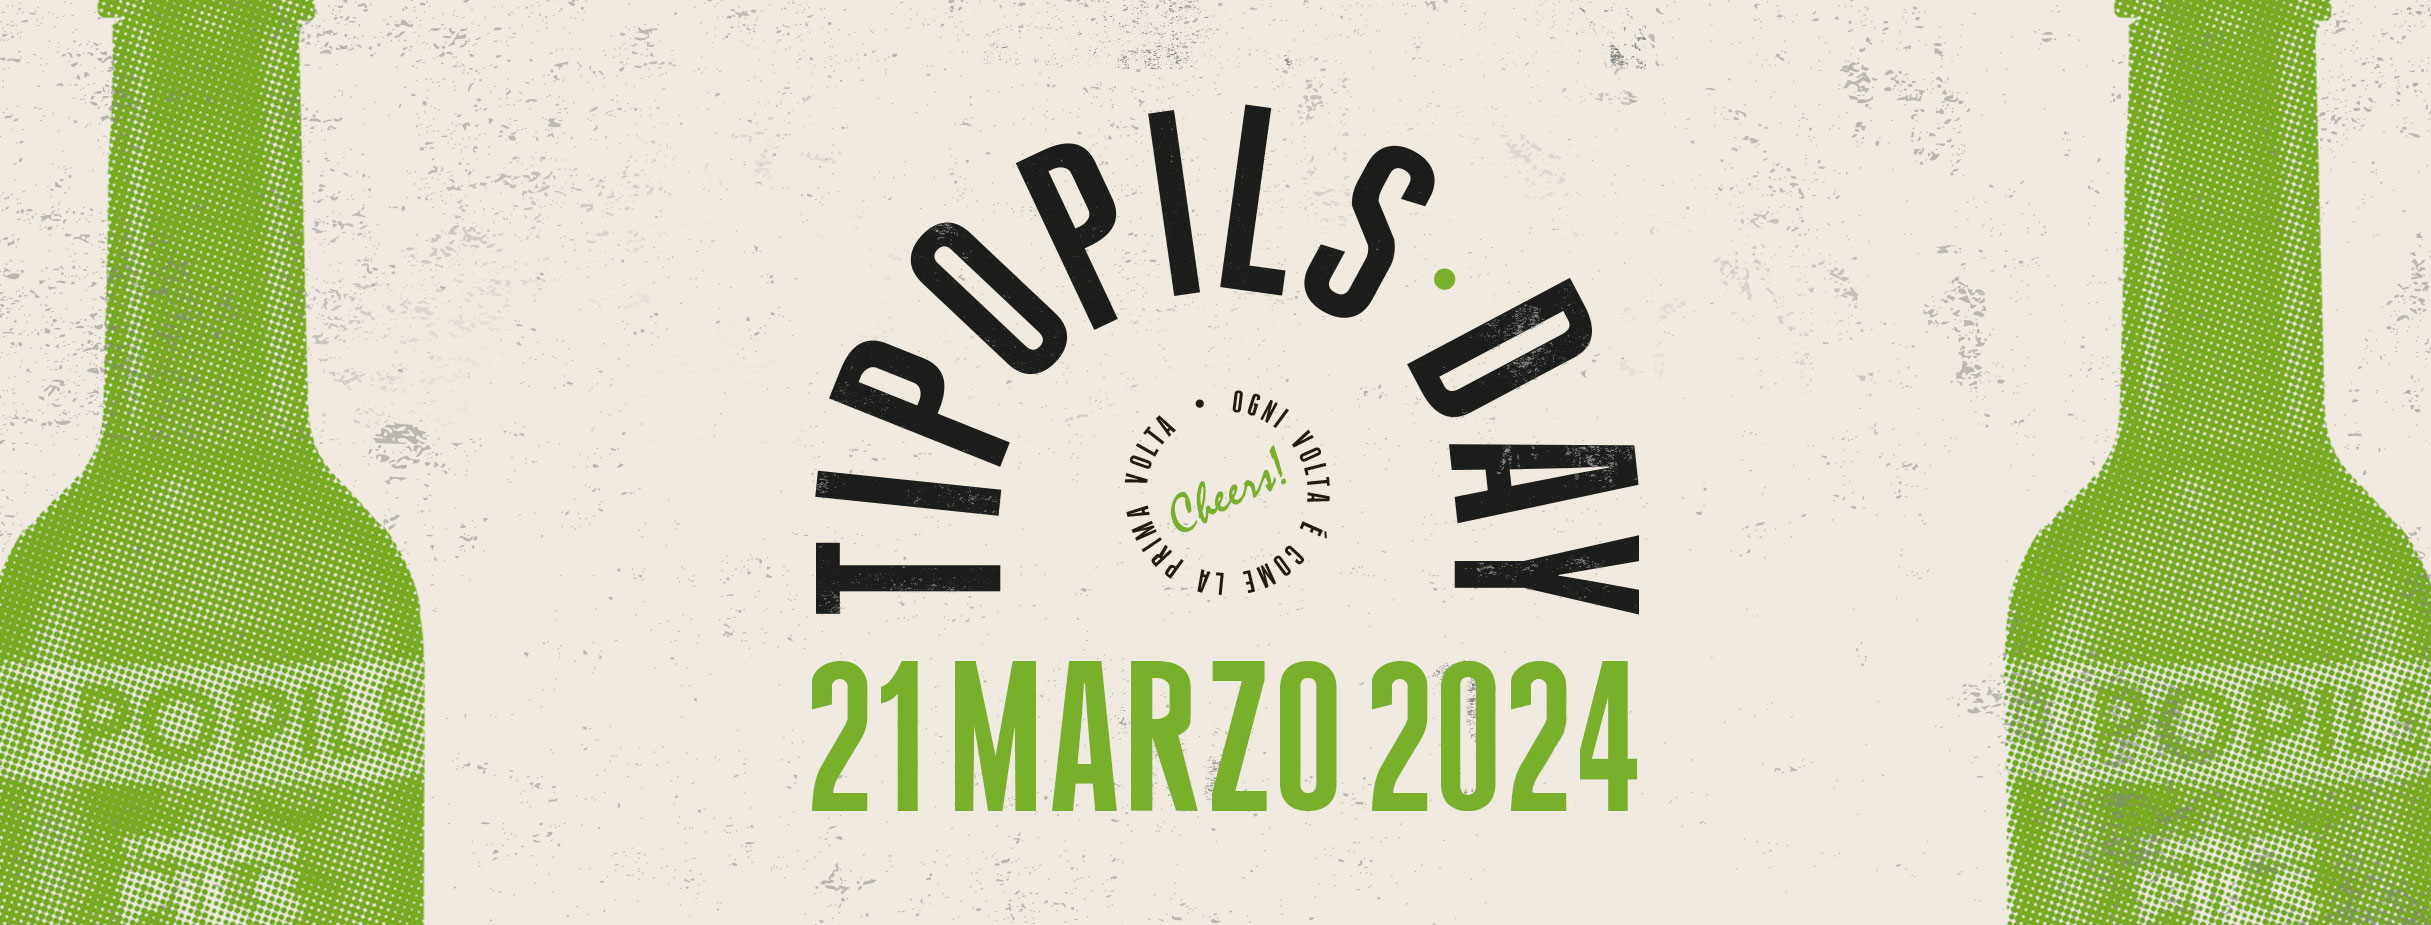 TIPOPILS DAYS (21 Marzo in poi)